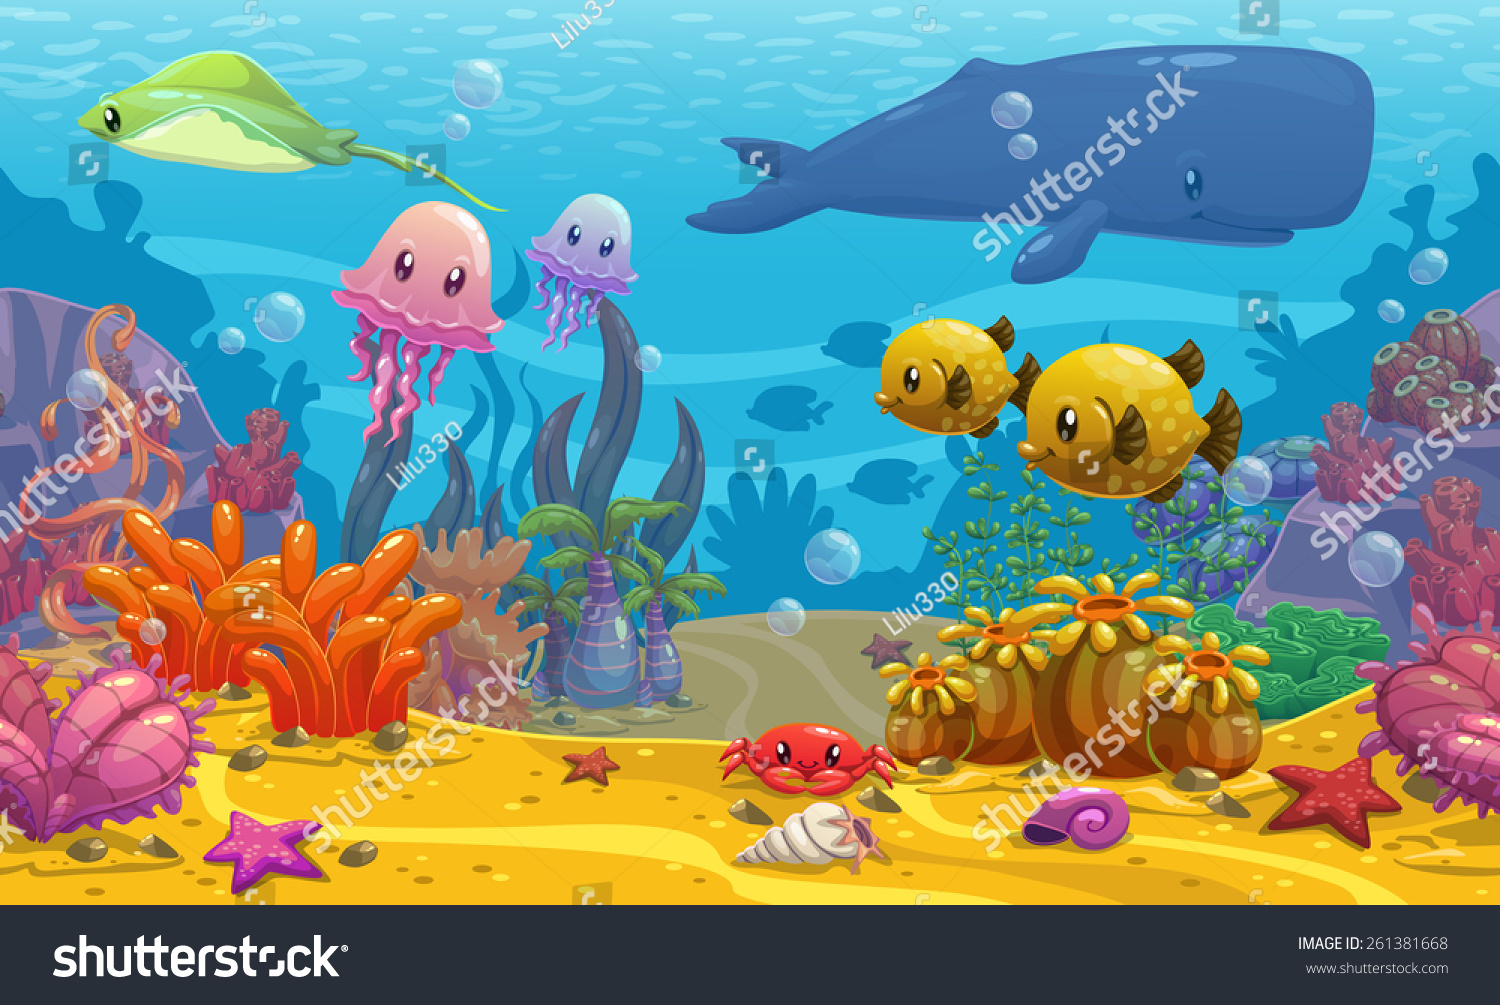 Seamless Underwater Cartoon Vector Illustration - 261381668 : Shutterstock